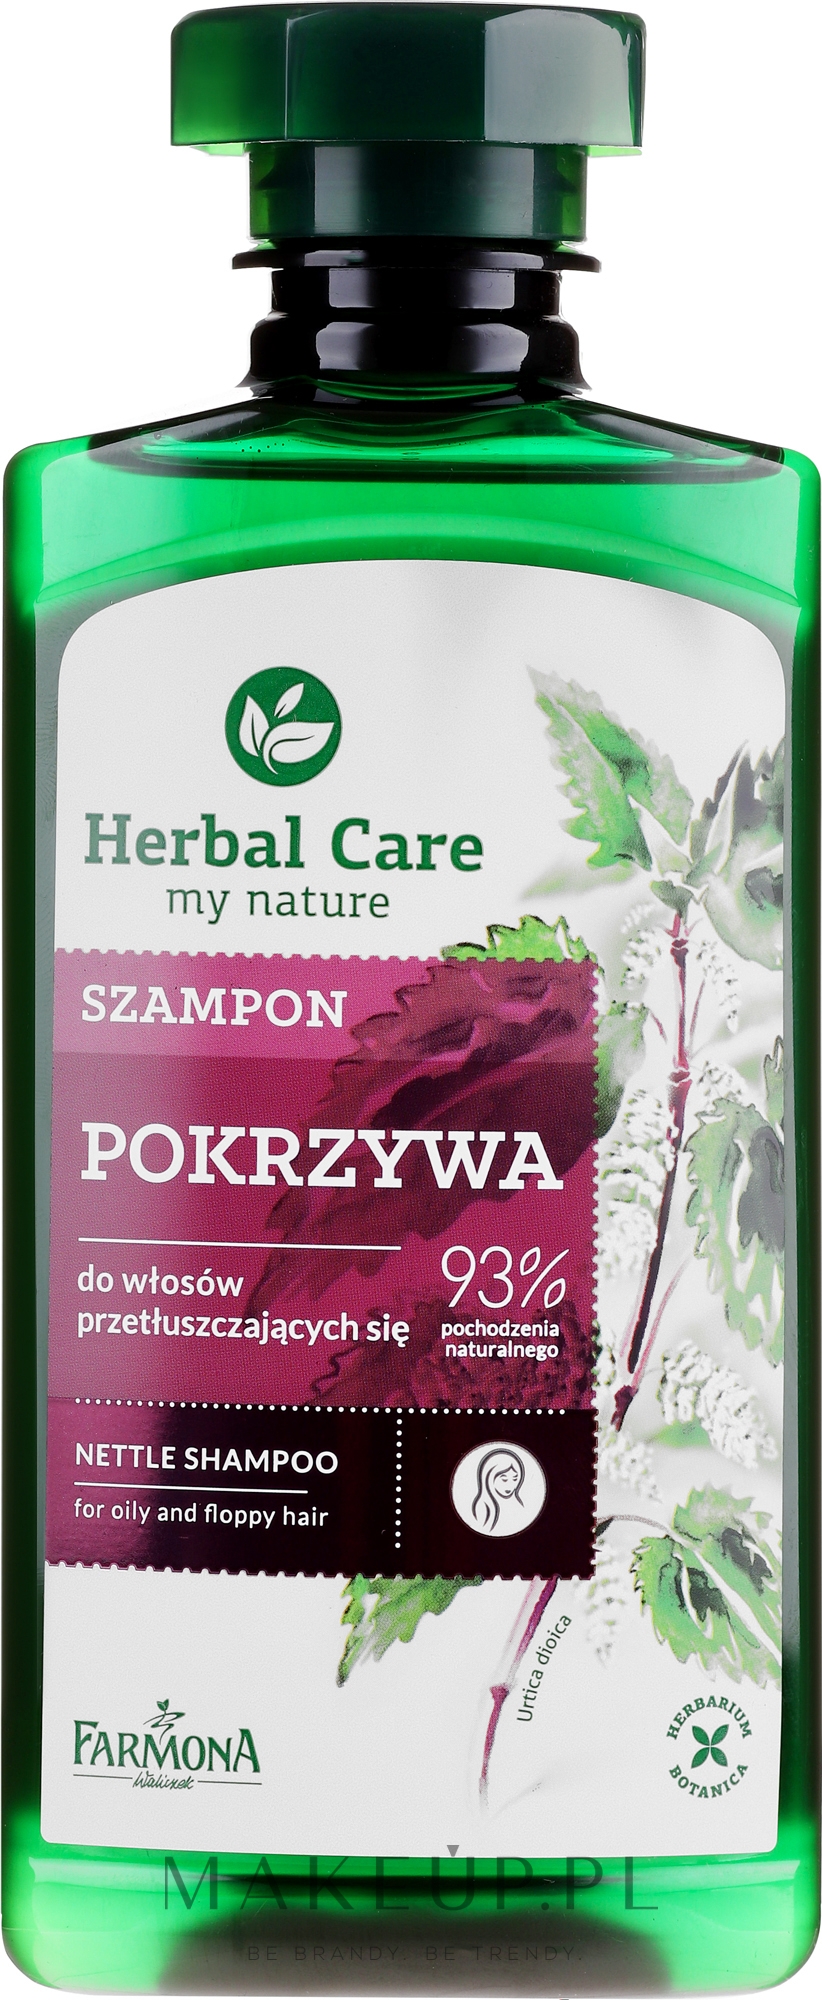 herbal care szampon pokrzywa superpharm